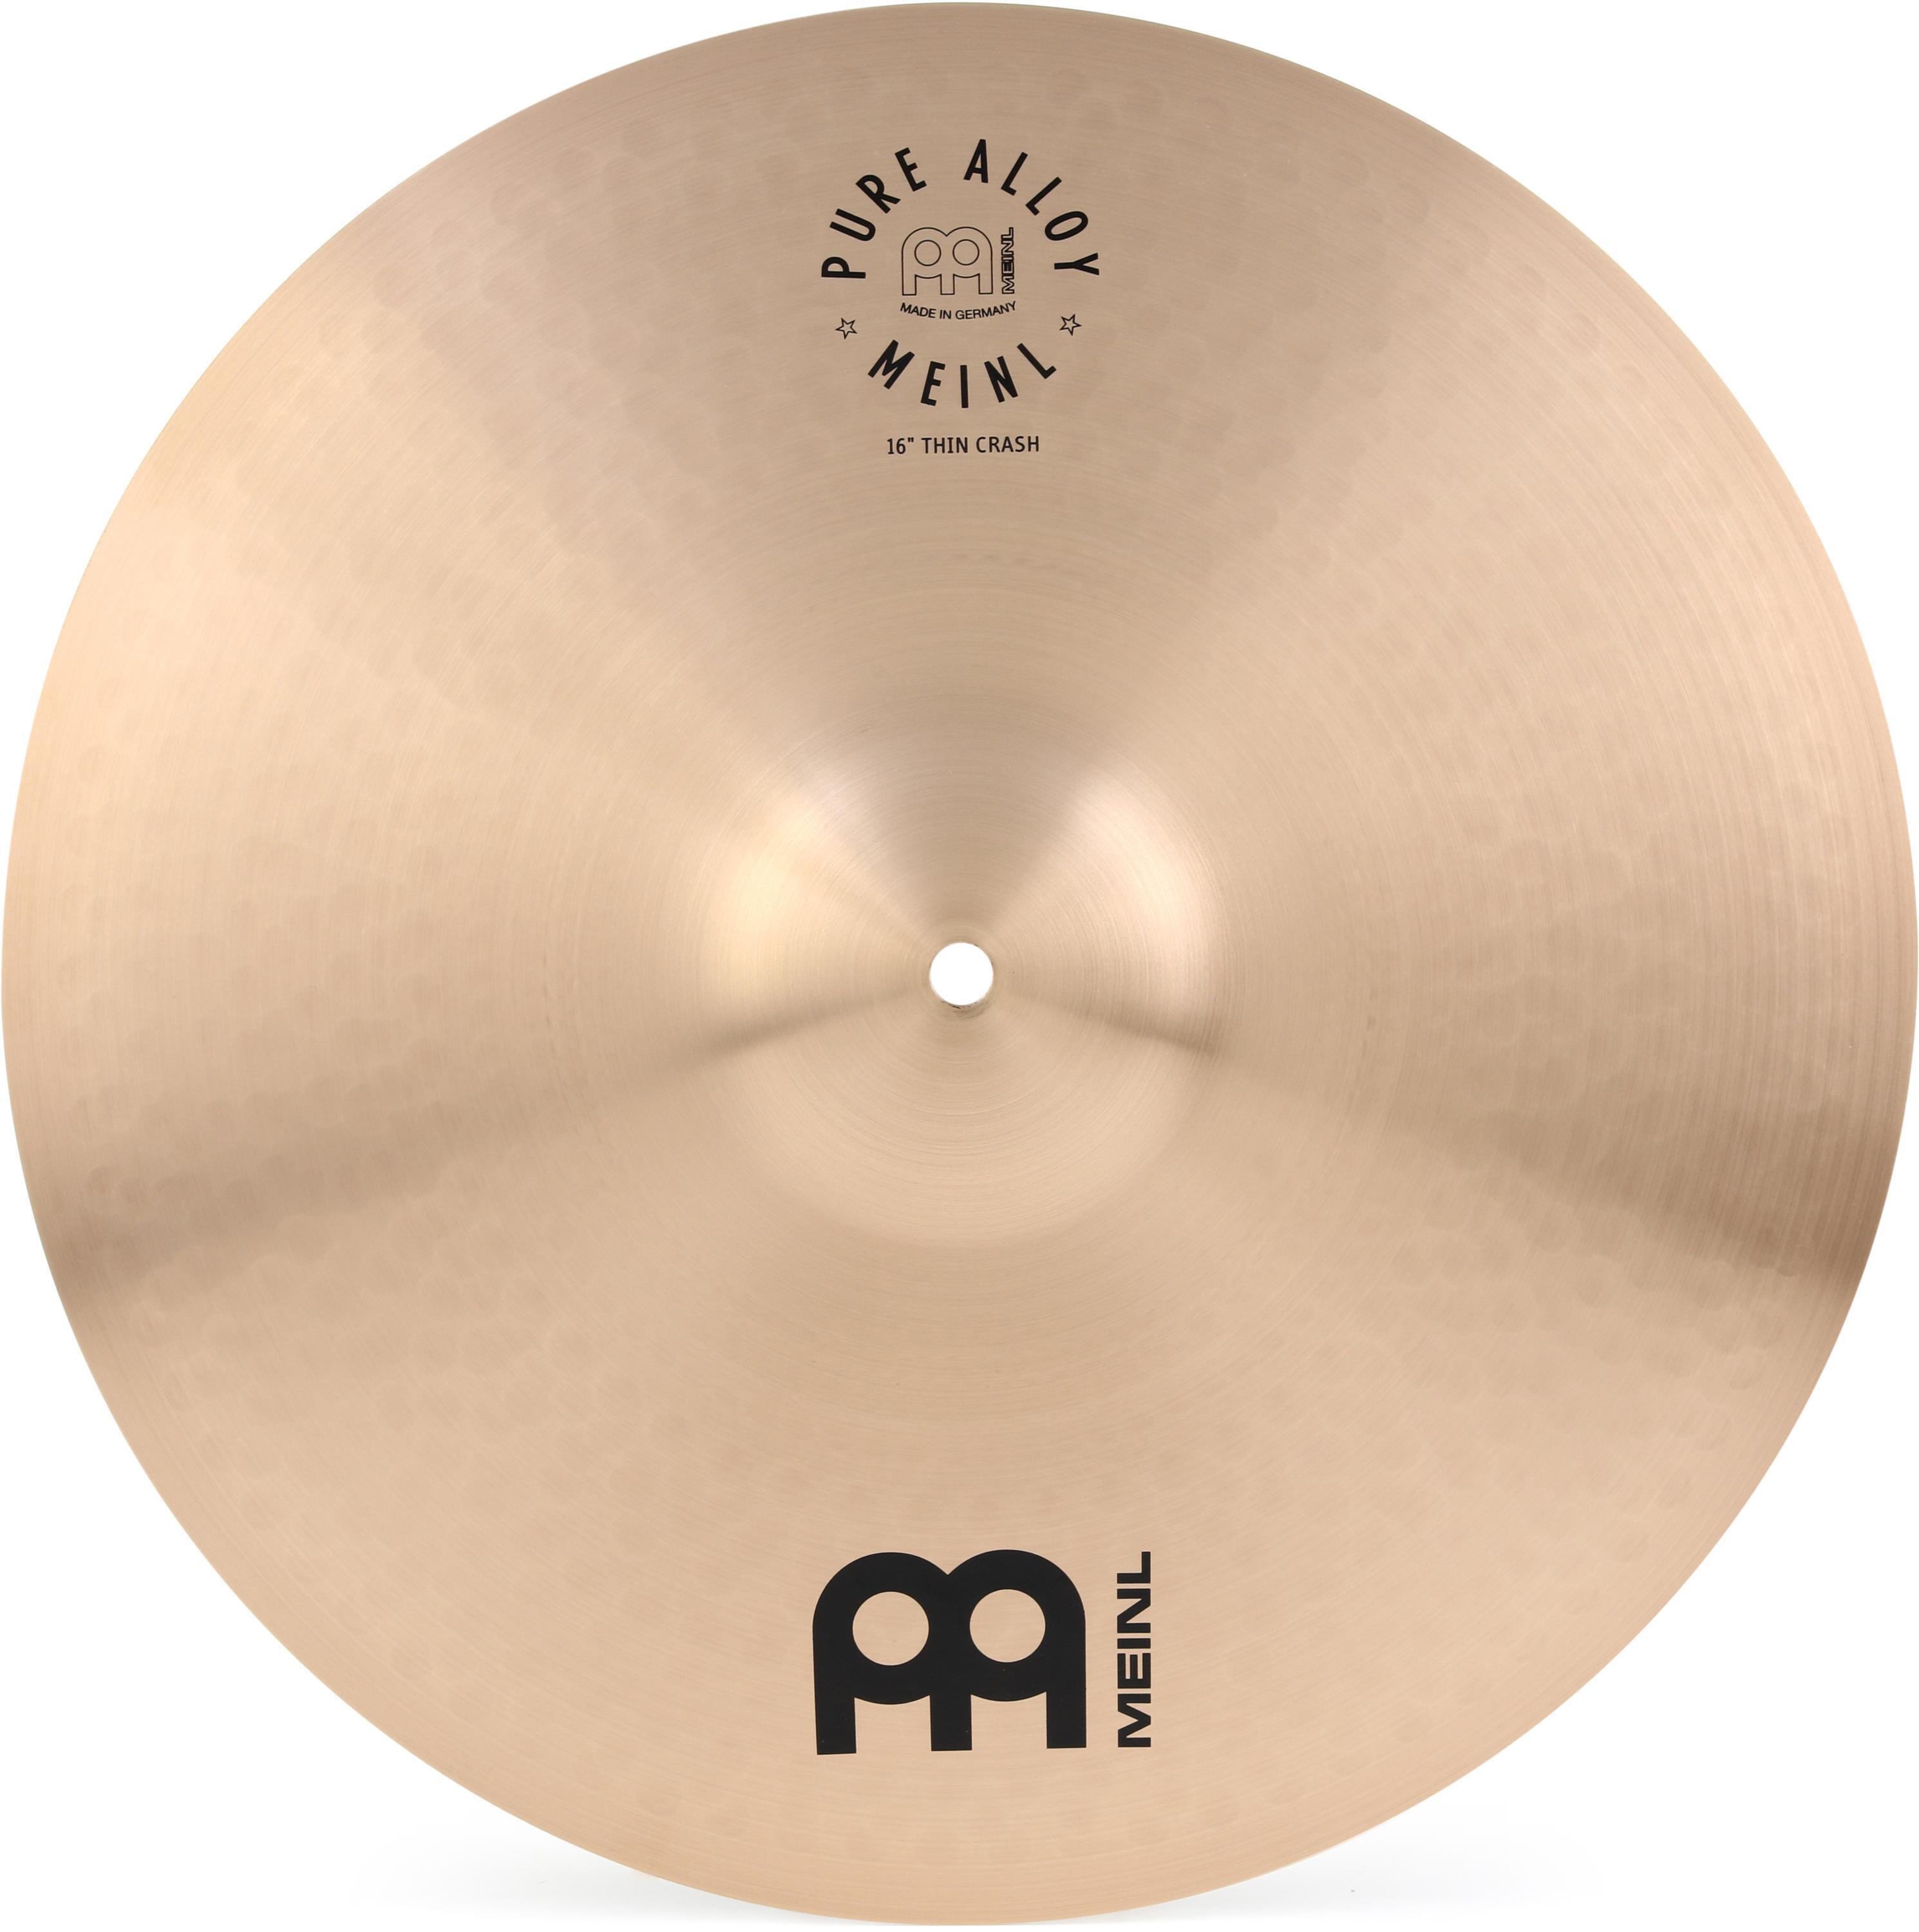 Bundled Item: Meinl Cymbals Pure Alloy Thin Crash Cymbal - 16 inch